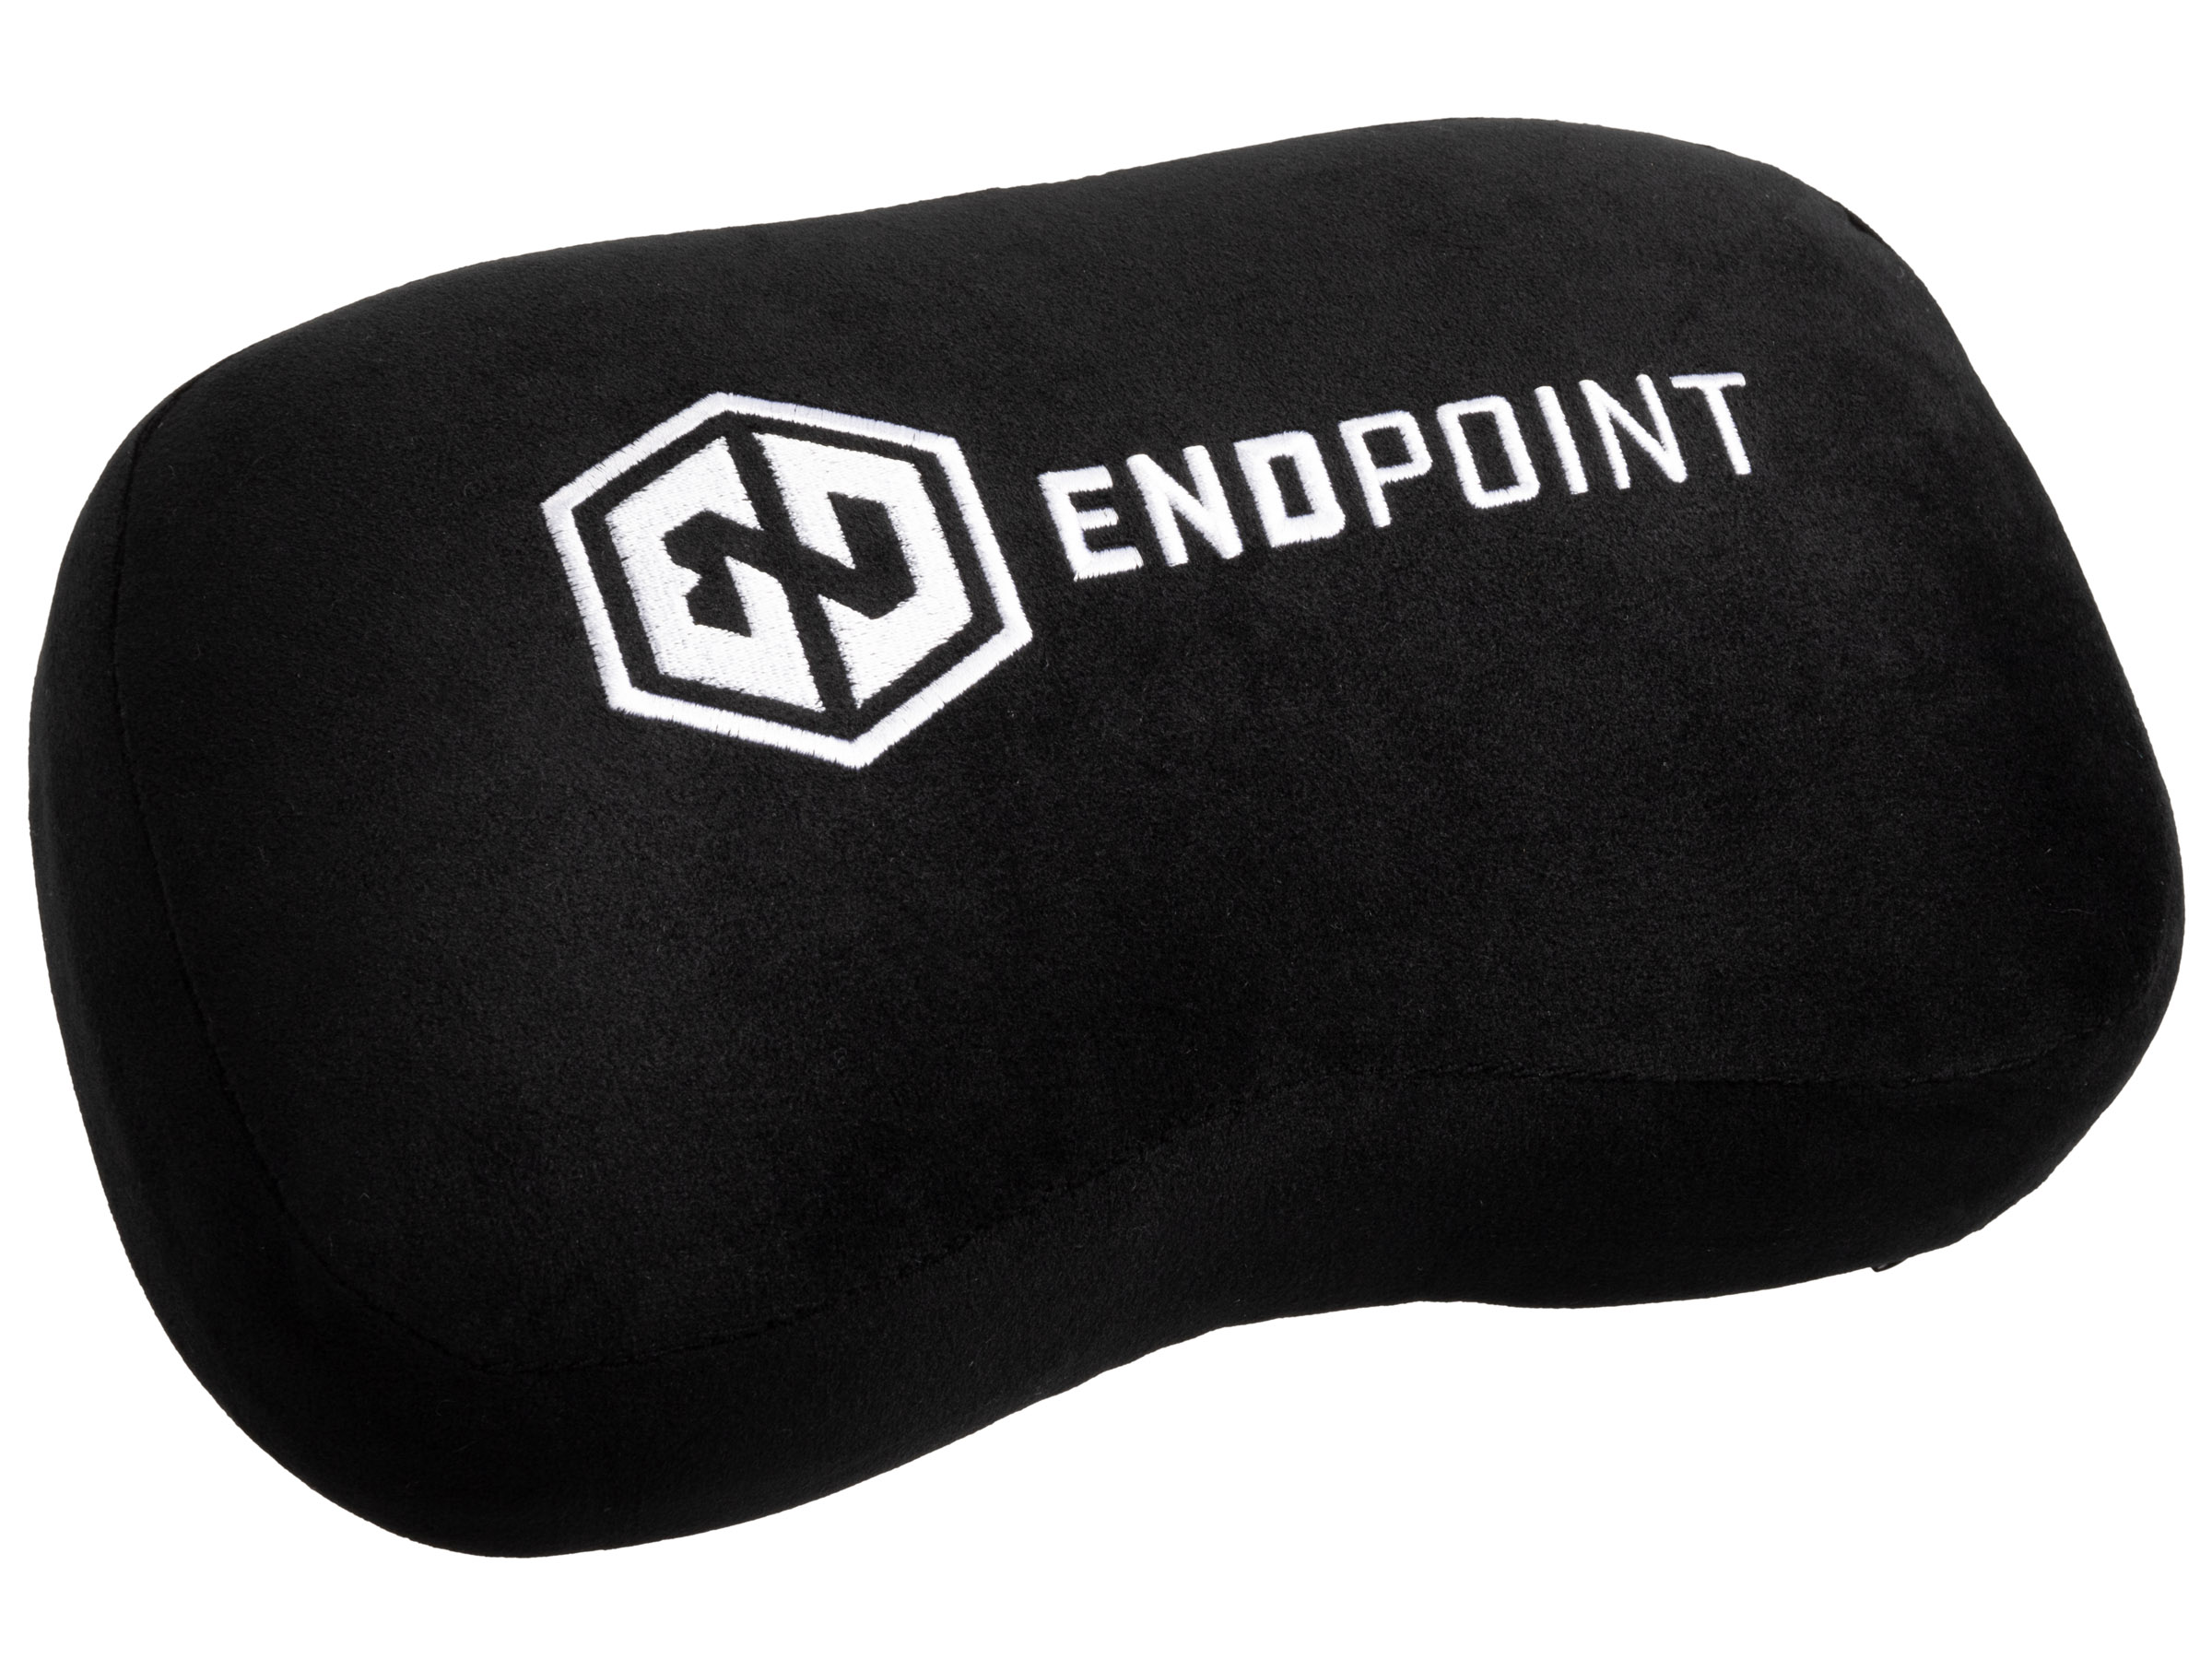 noblechairs Endpoint memory foam pillow